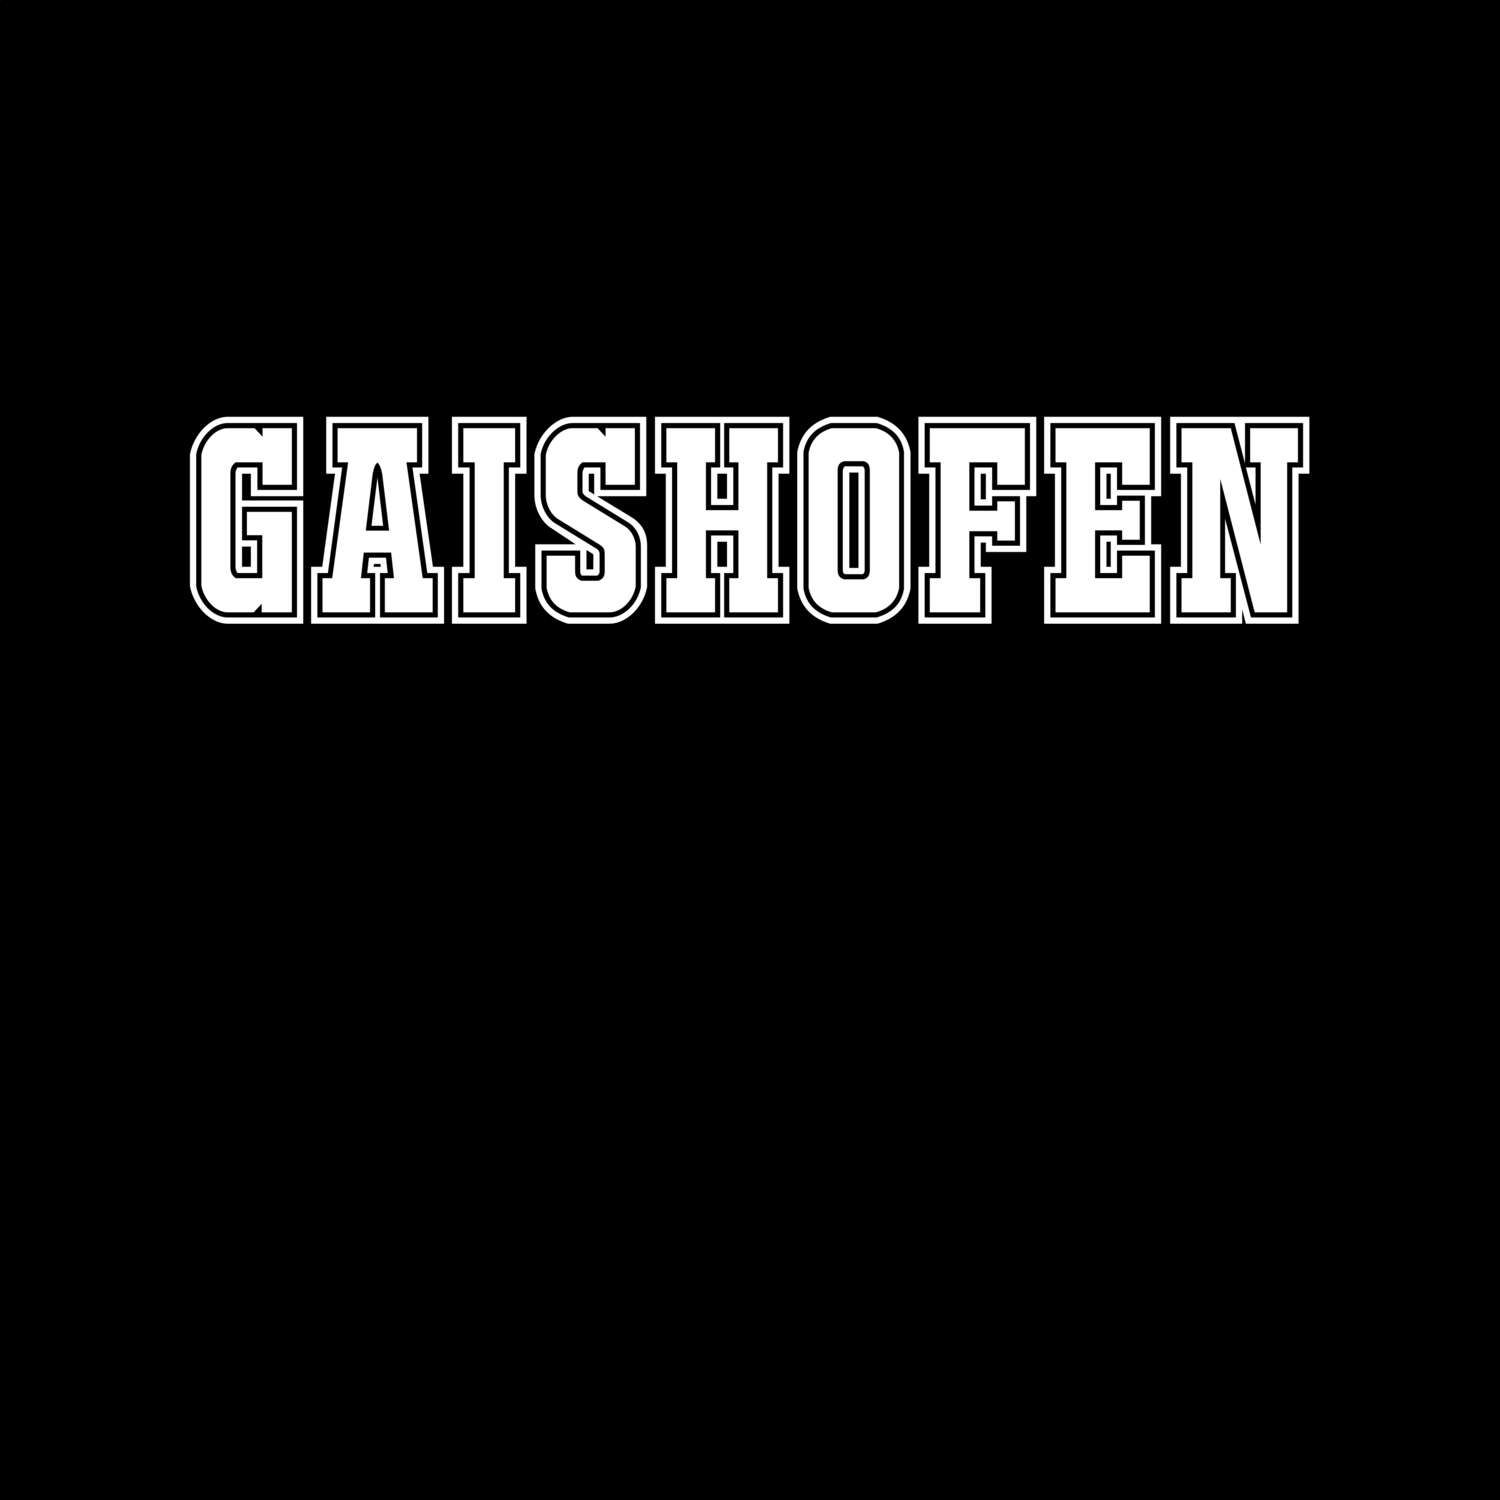 Gaishofen T-Shirt »Classic«